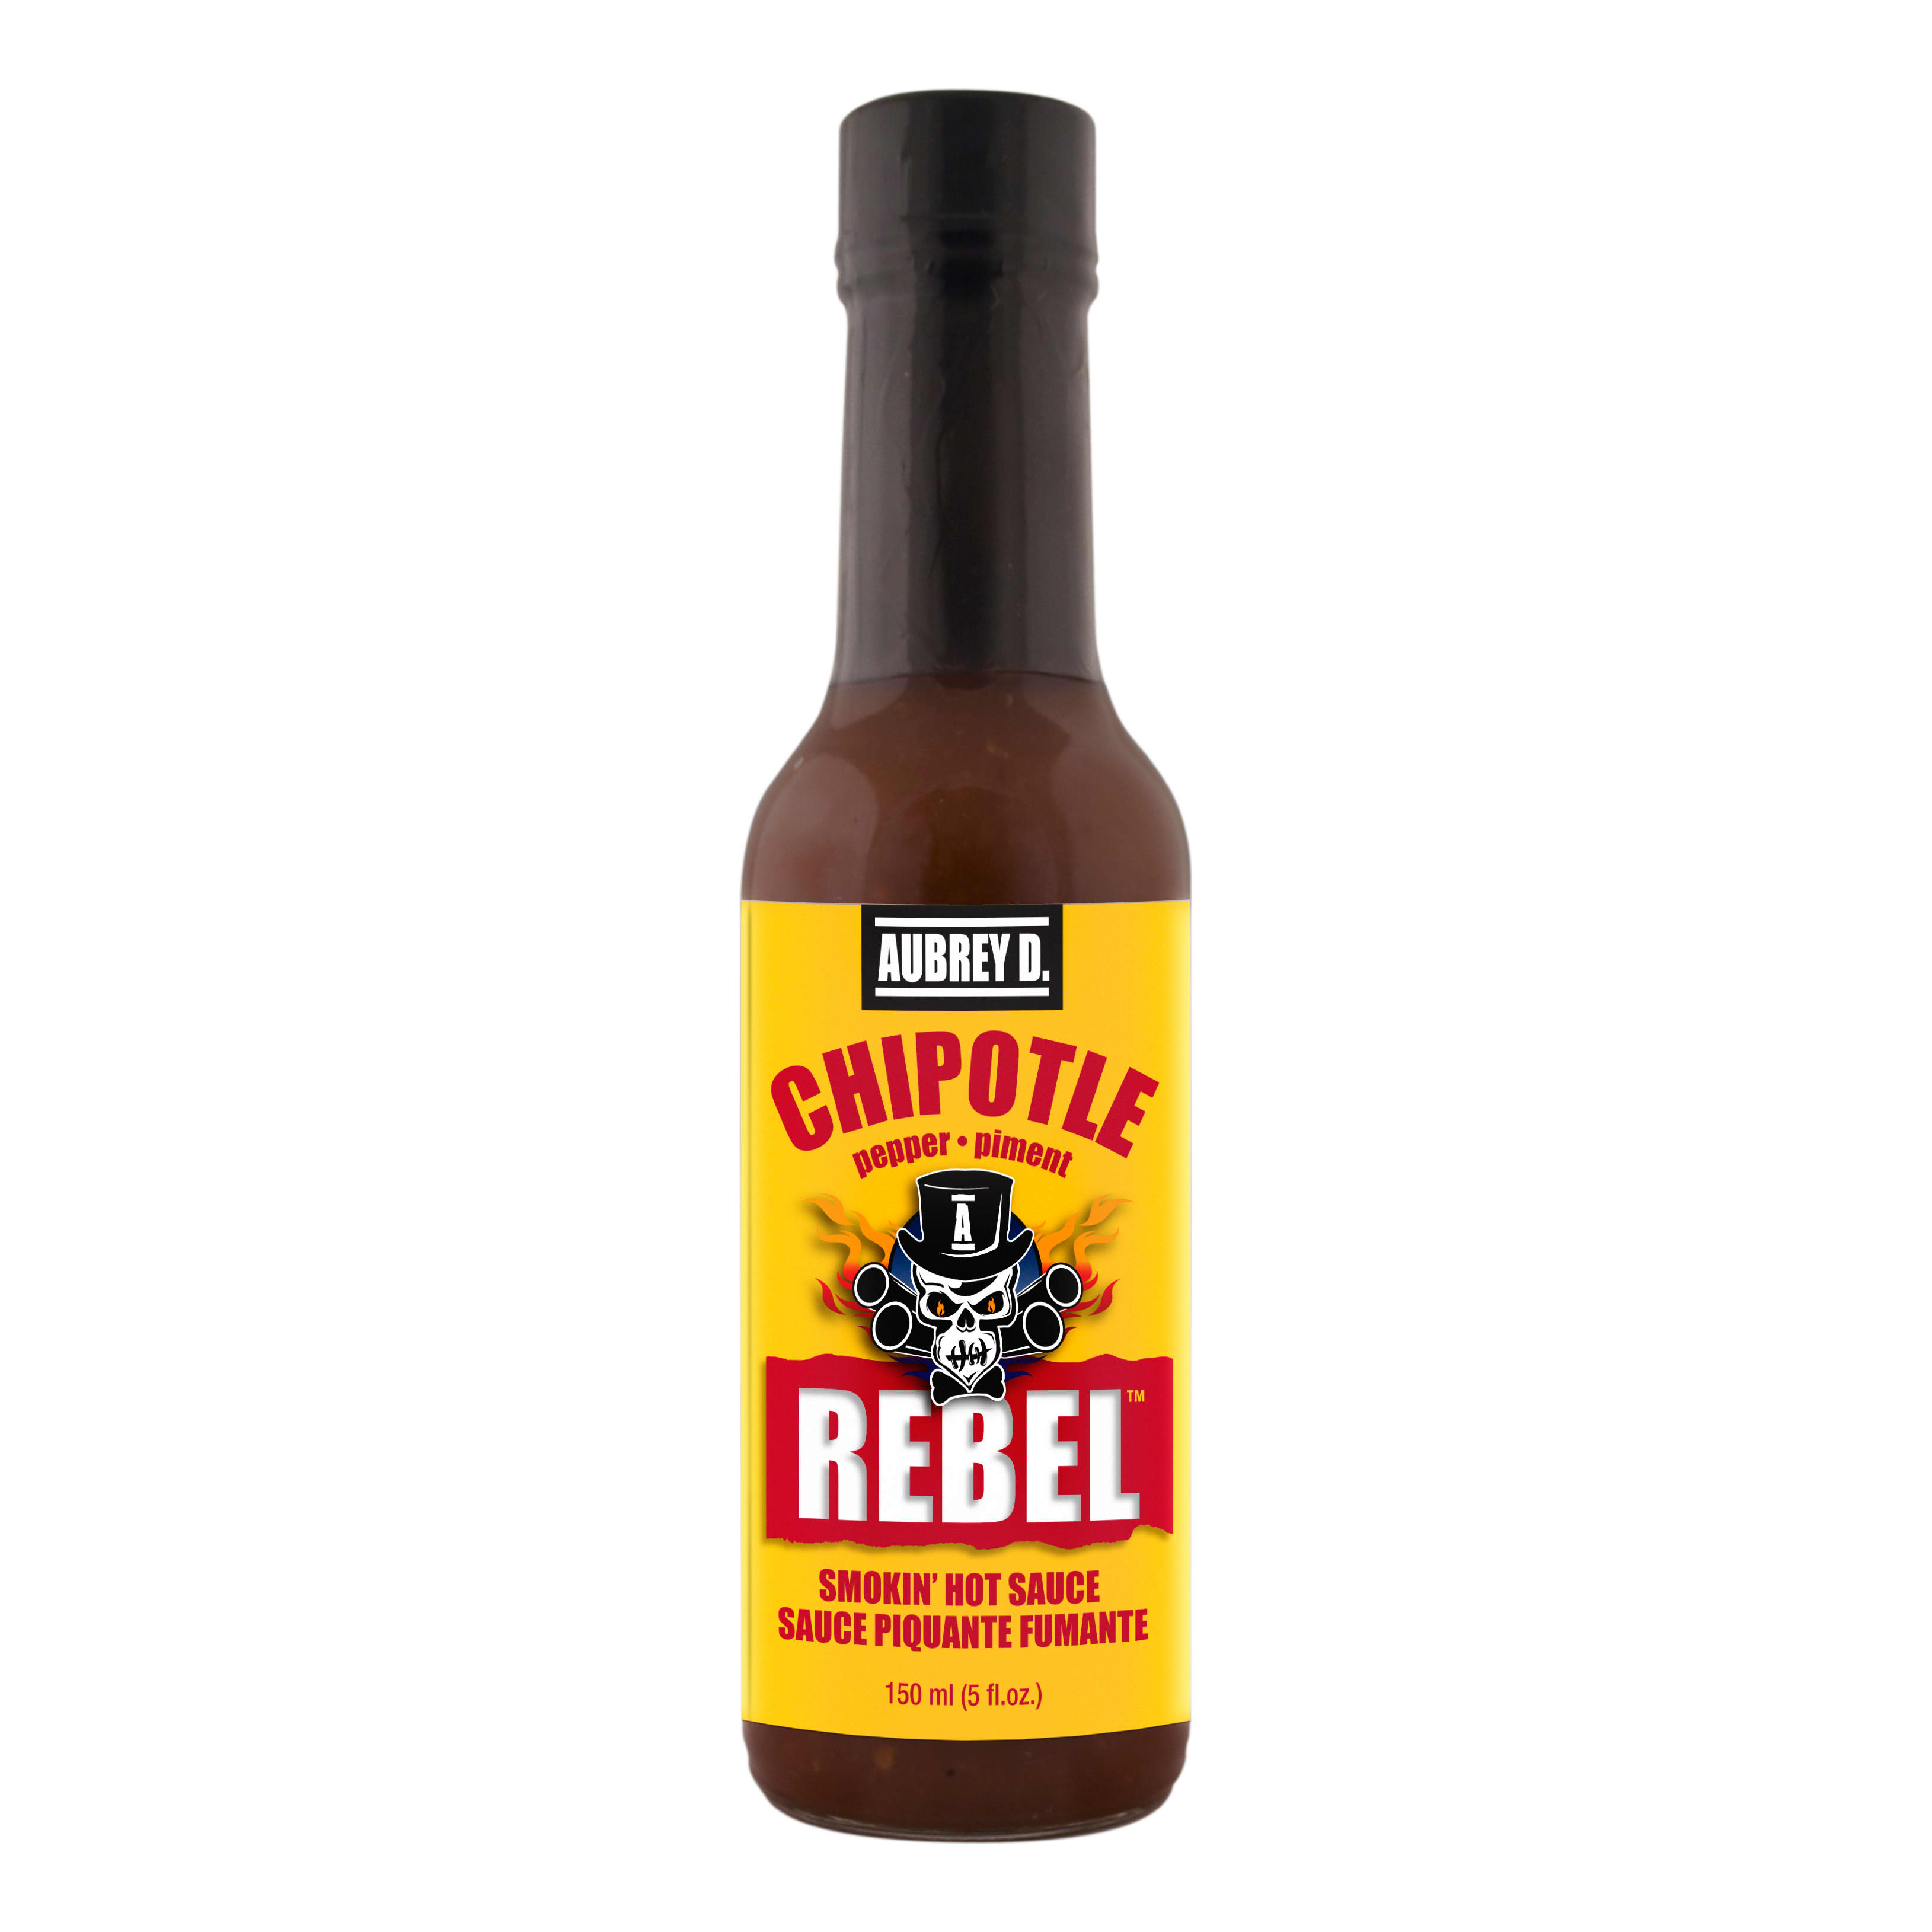 Aubrey D. Rebel Chipotle Plus Hot Sauce